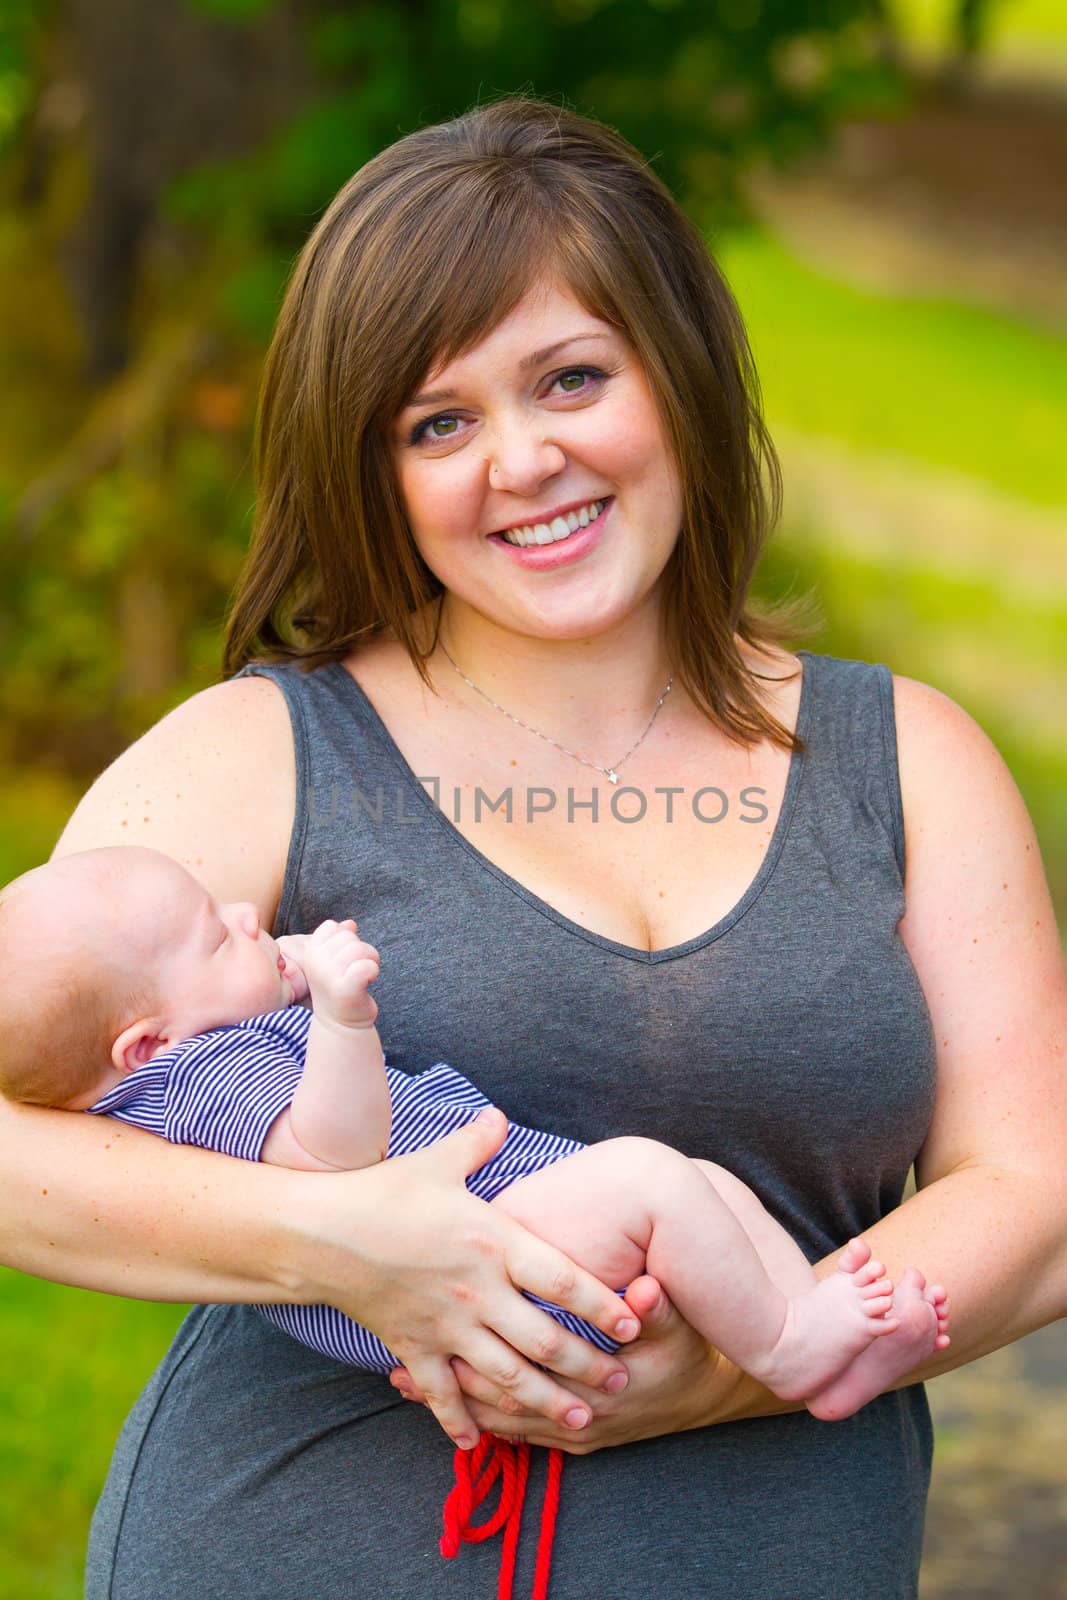 Woman and Newborn by joshuaraineyphotography